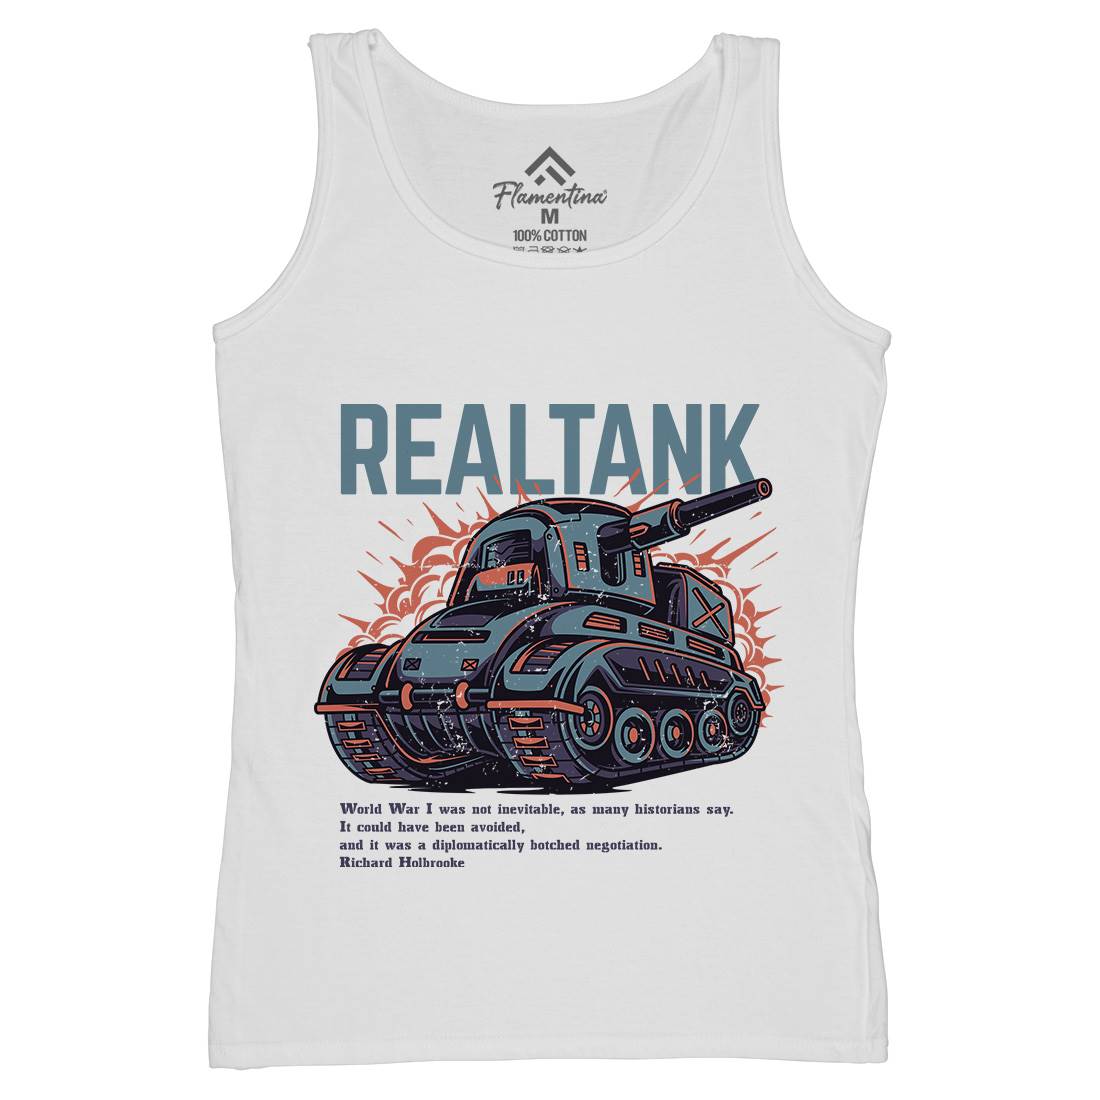 Tank Womens Organic Tank Top Vest Army D691